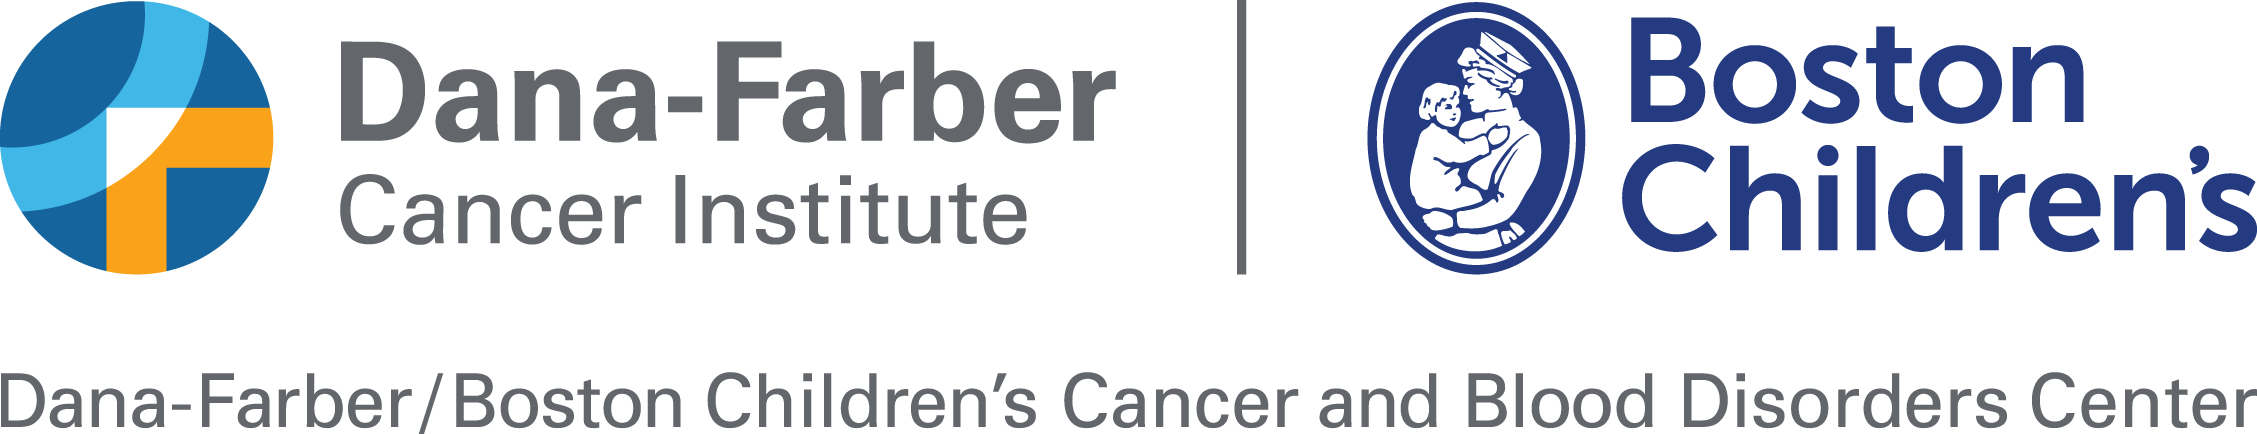 Dana-Farber Boston Children's Cancer and Blood Disorders Center logo